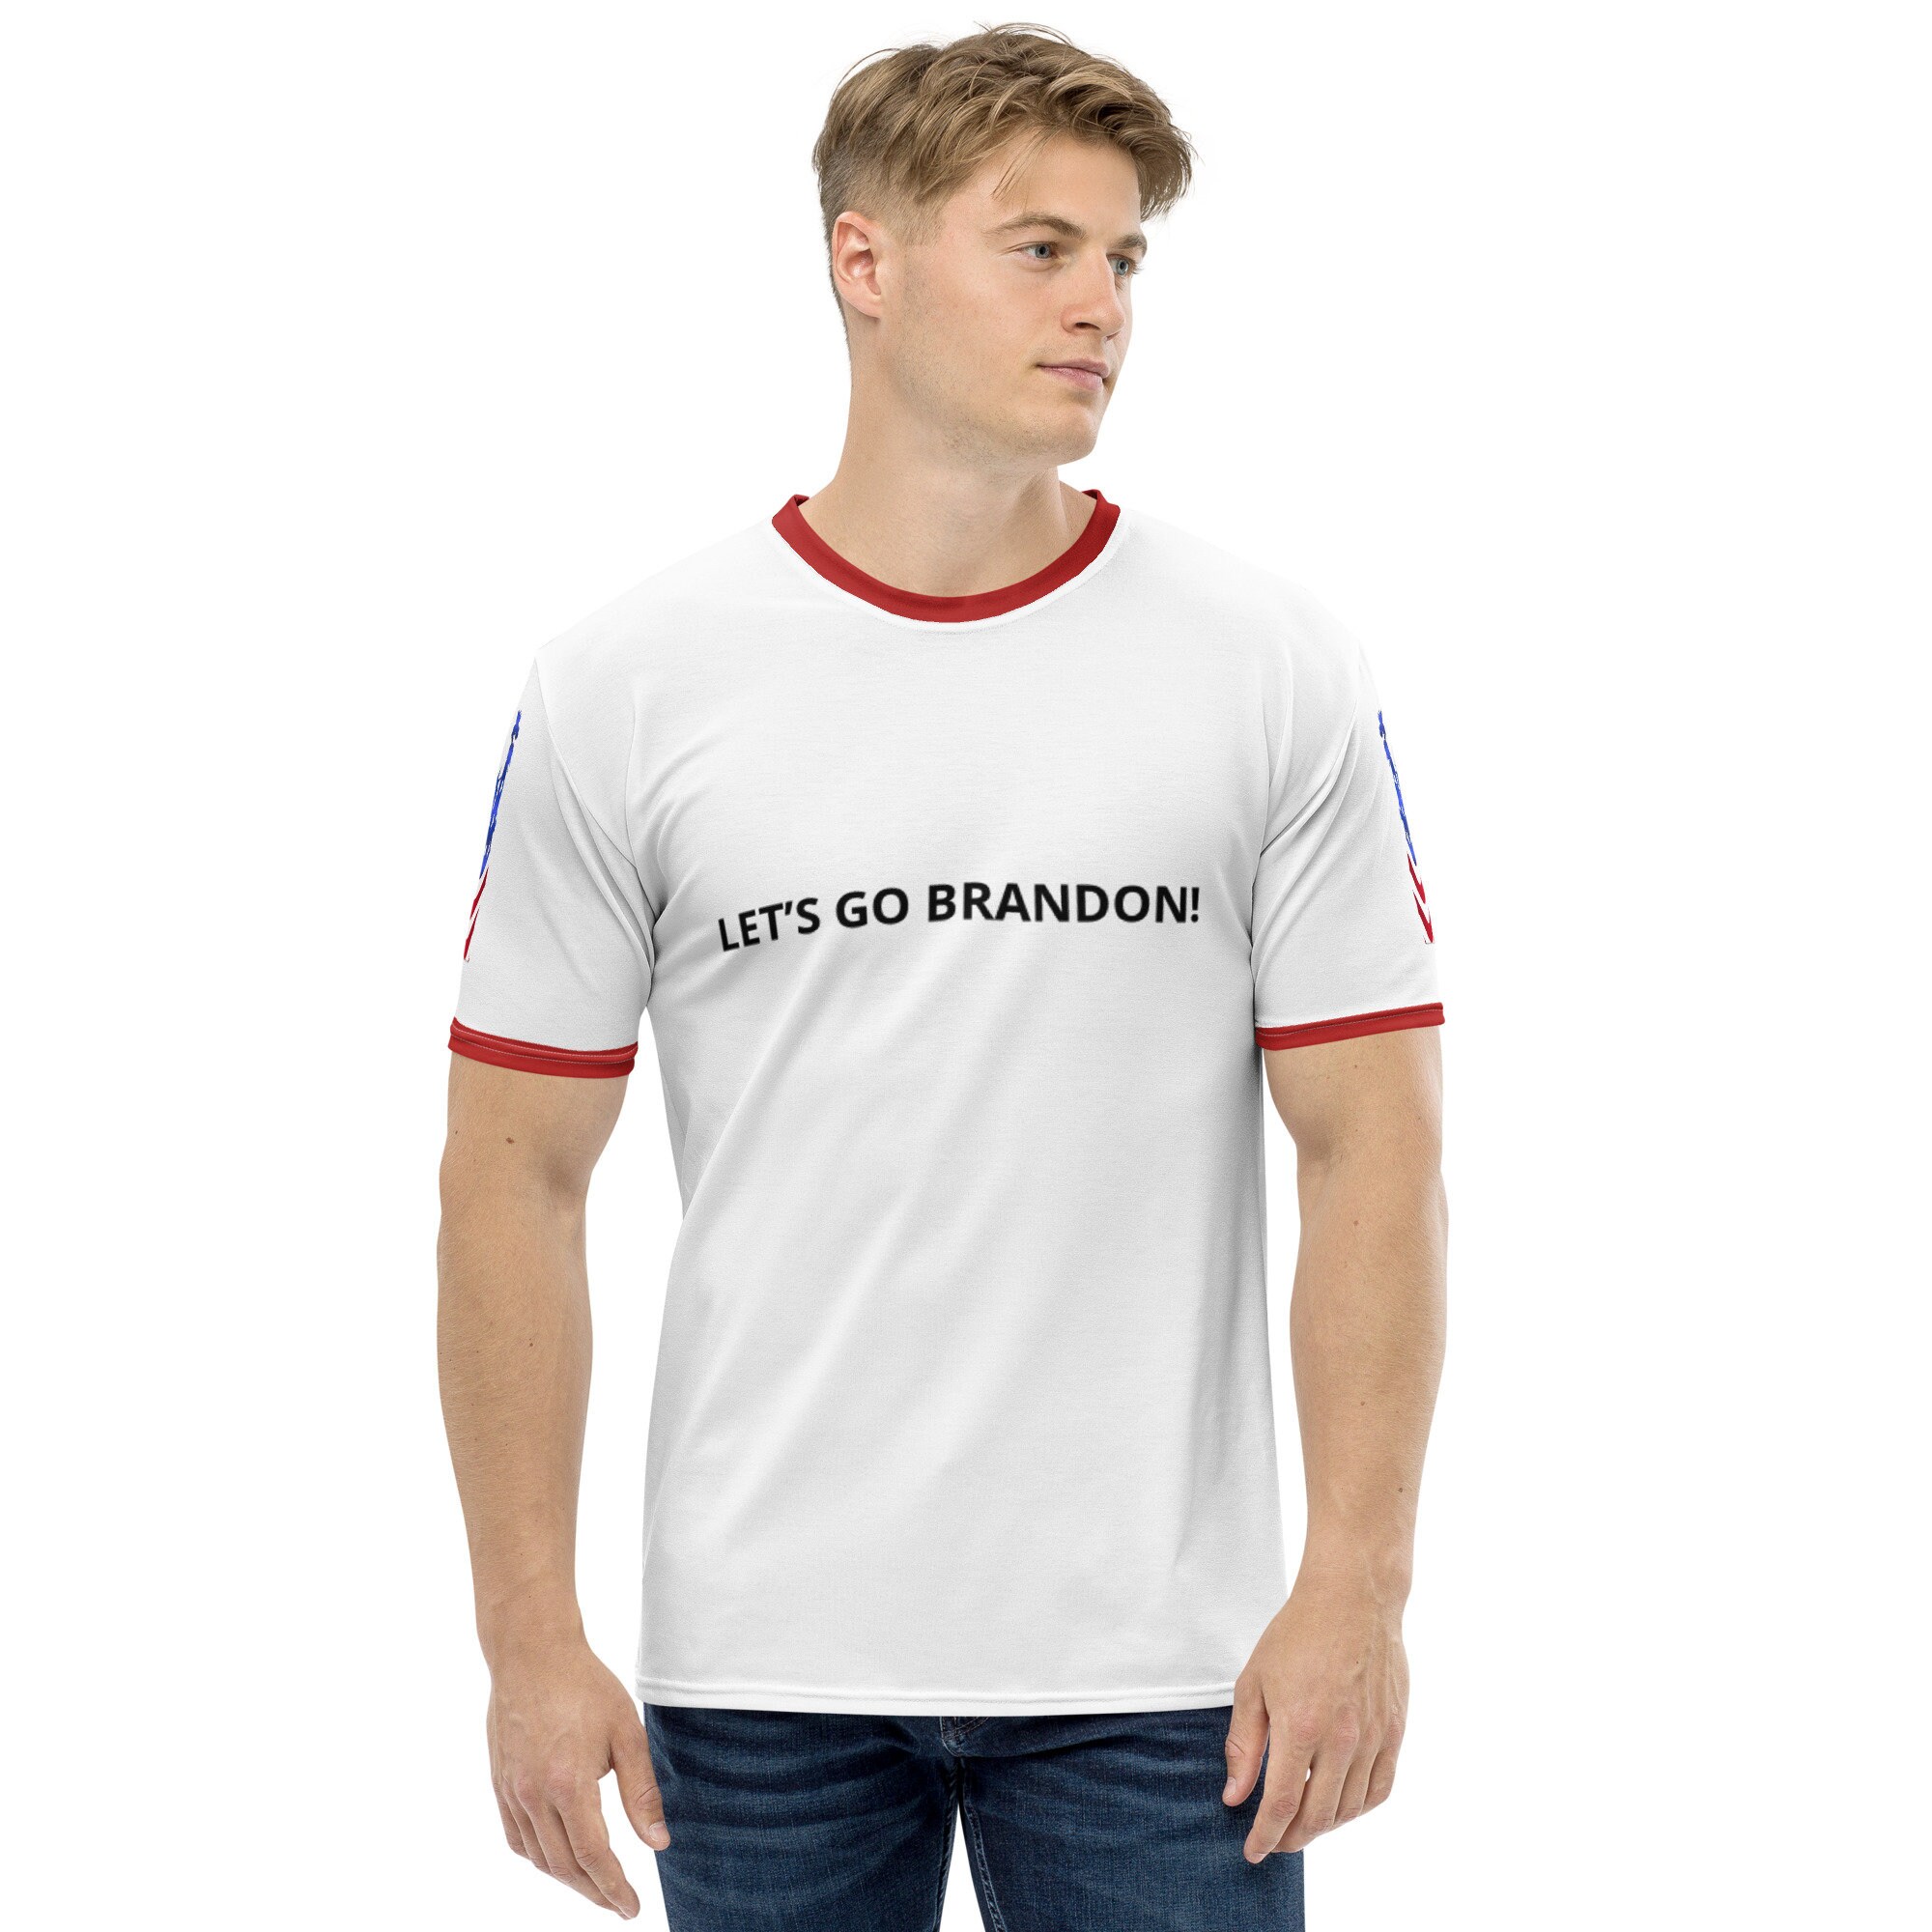 Lets GO BRANDON Unisex T-shirt 